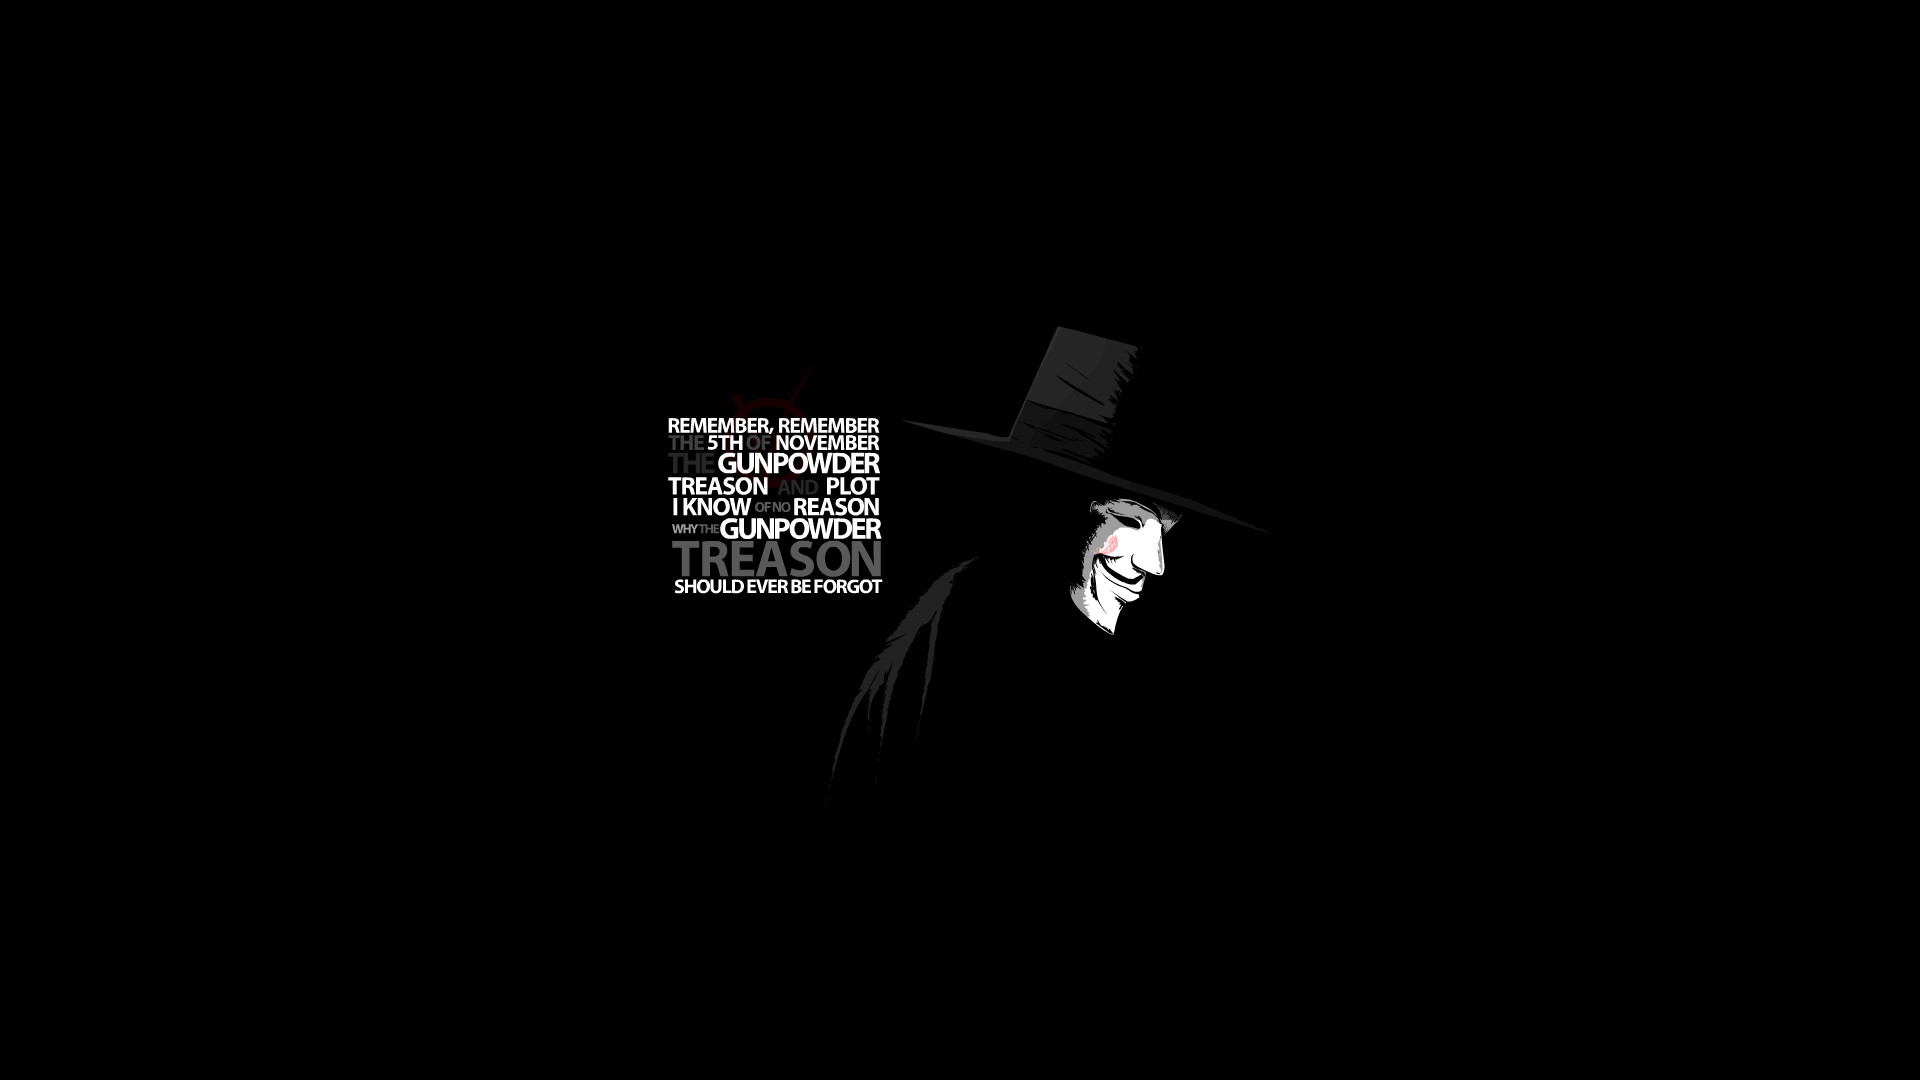 1920x1080 ... V for Vendetta - 5th November quote wallpaper by Dulje